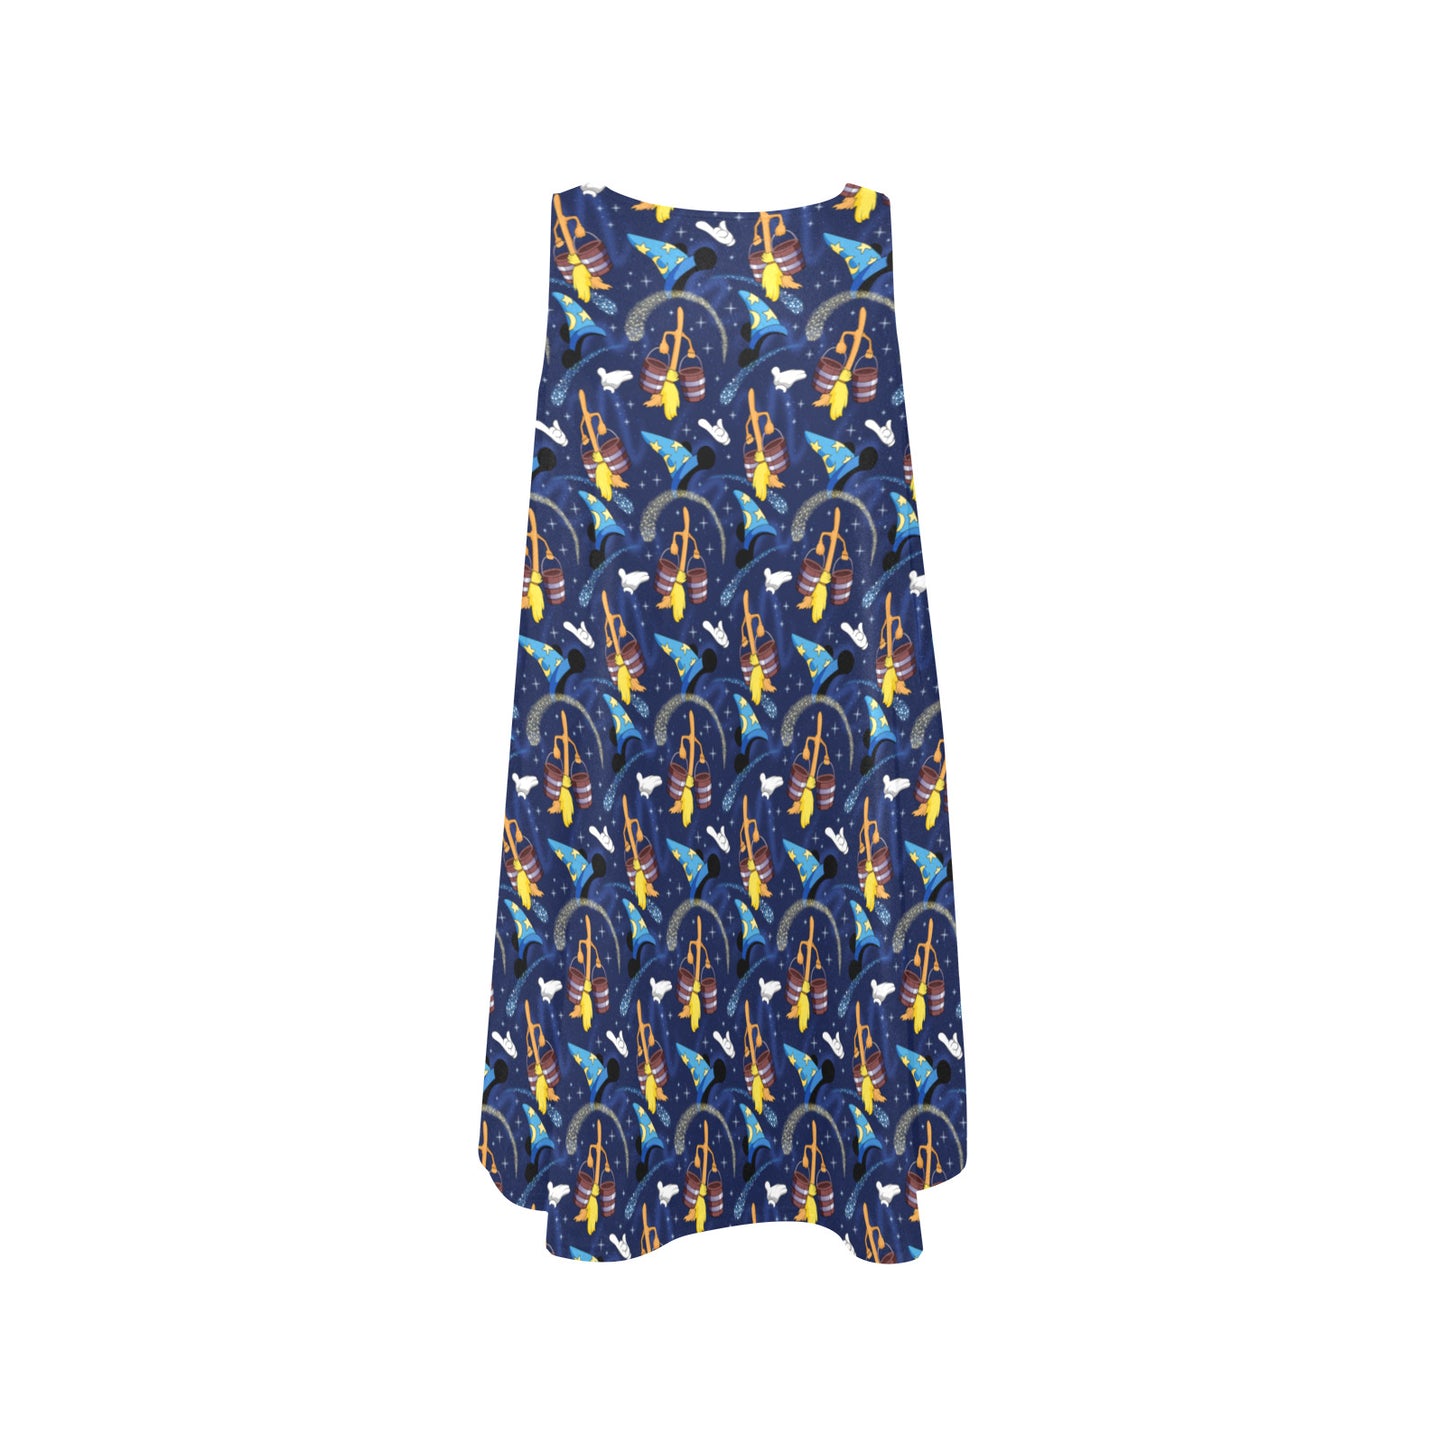 Fantasia Sleeveless A-Line Pocket Dress